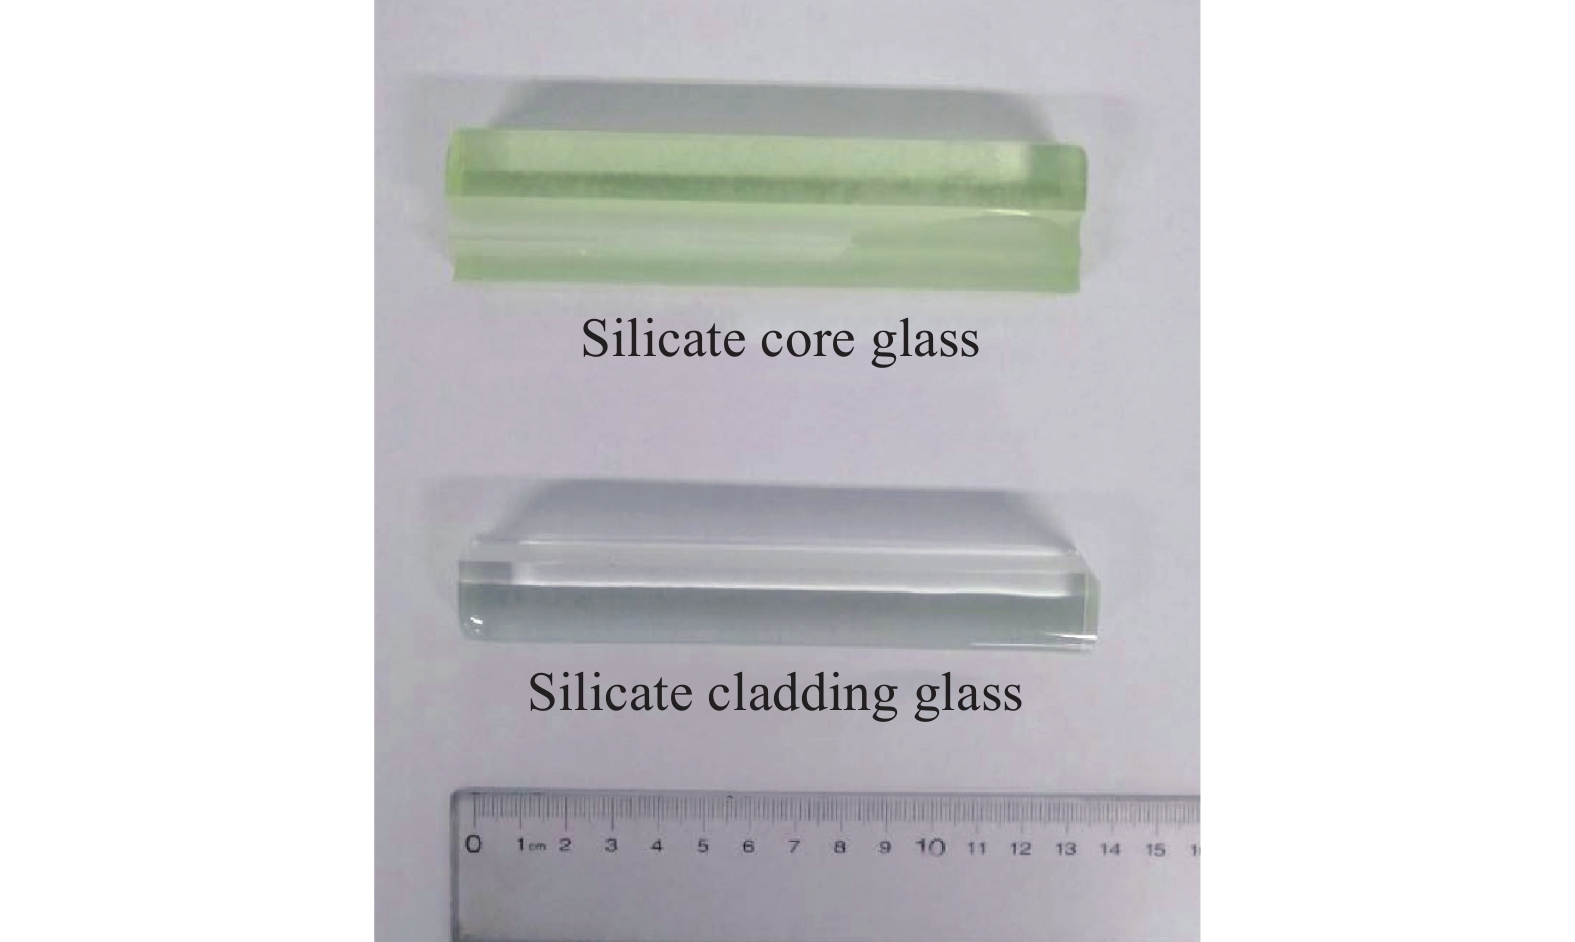 Fabricated silicate core glass and cladding glass